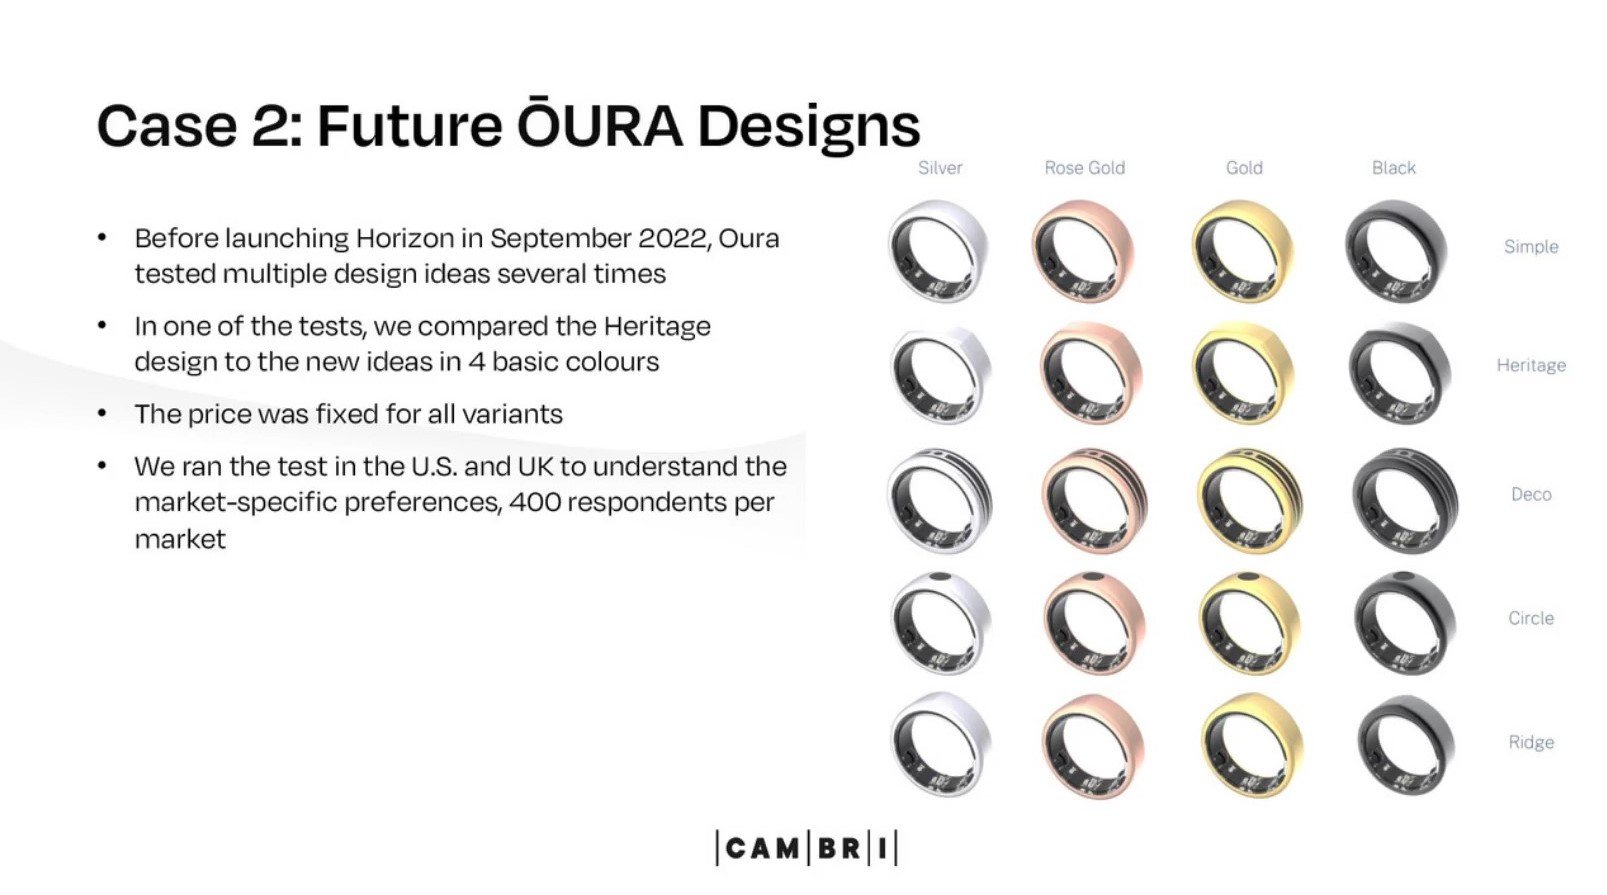 Case study 2: Deciding future Oura designs